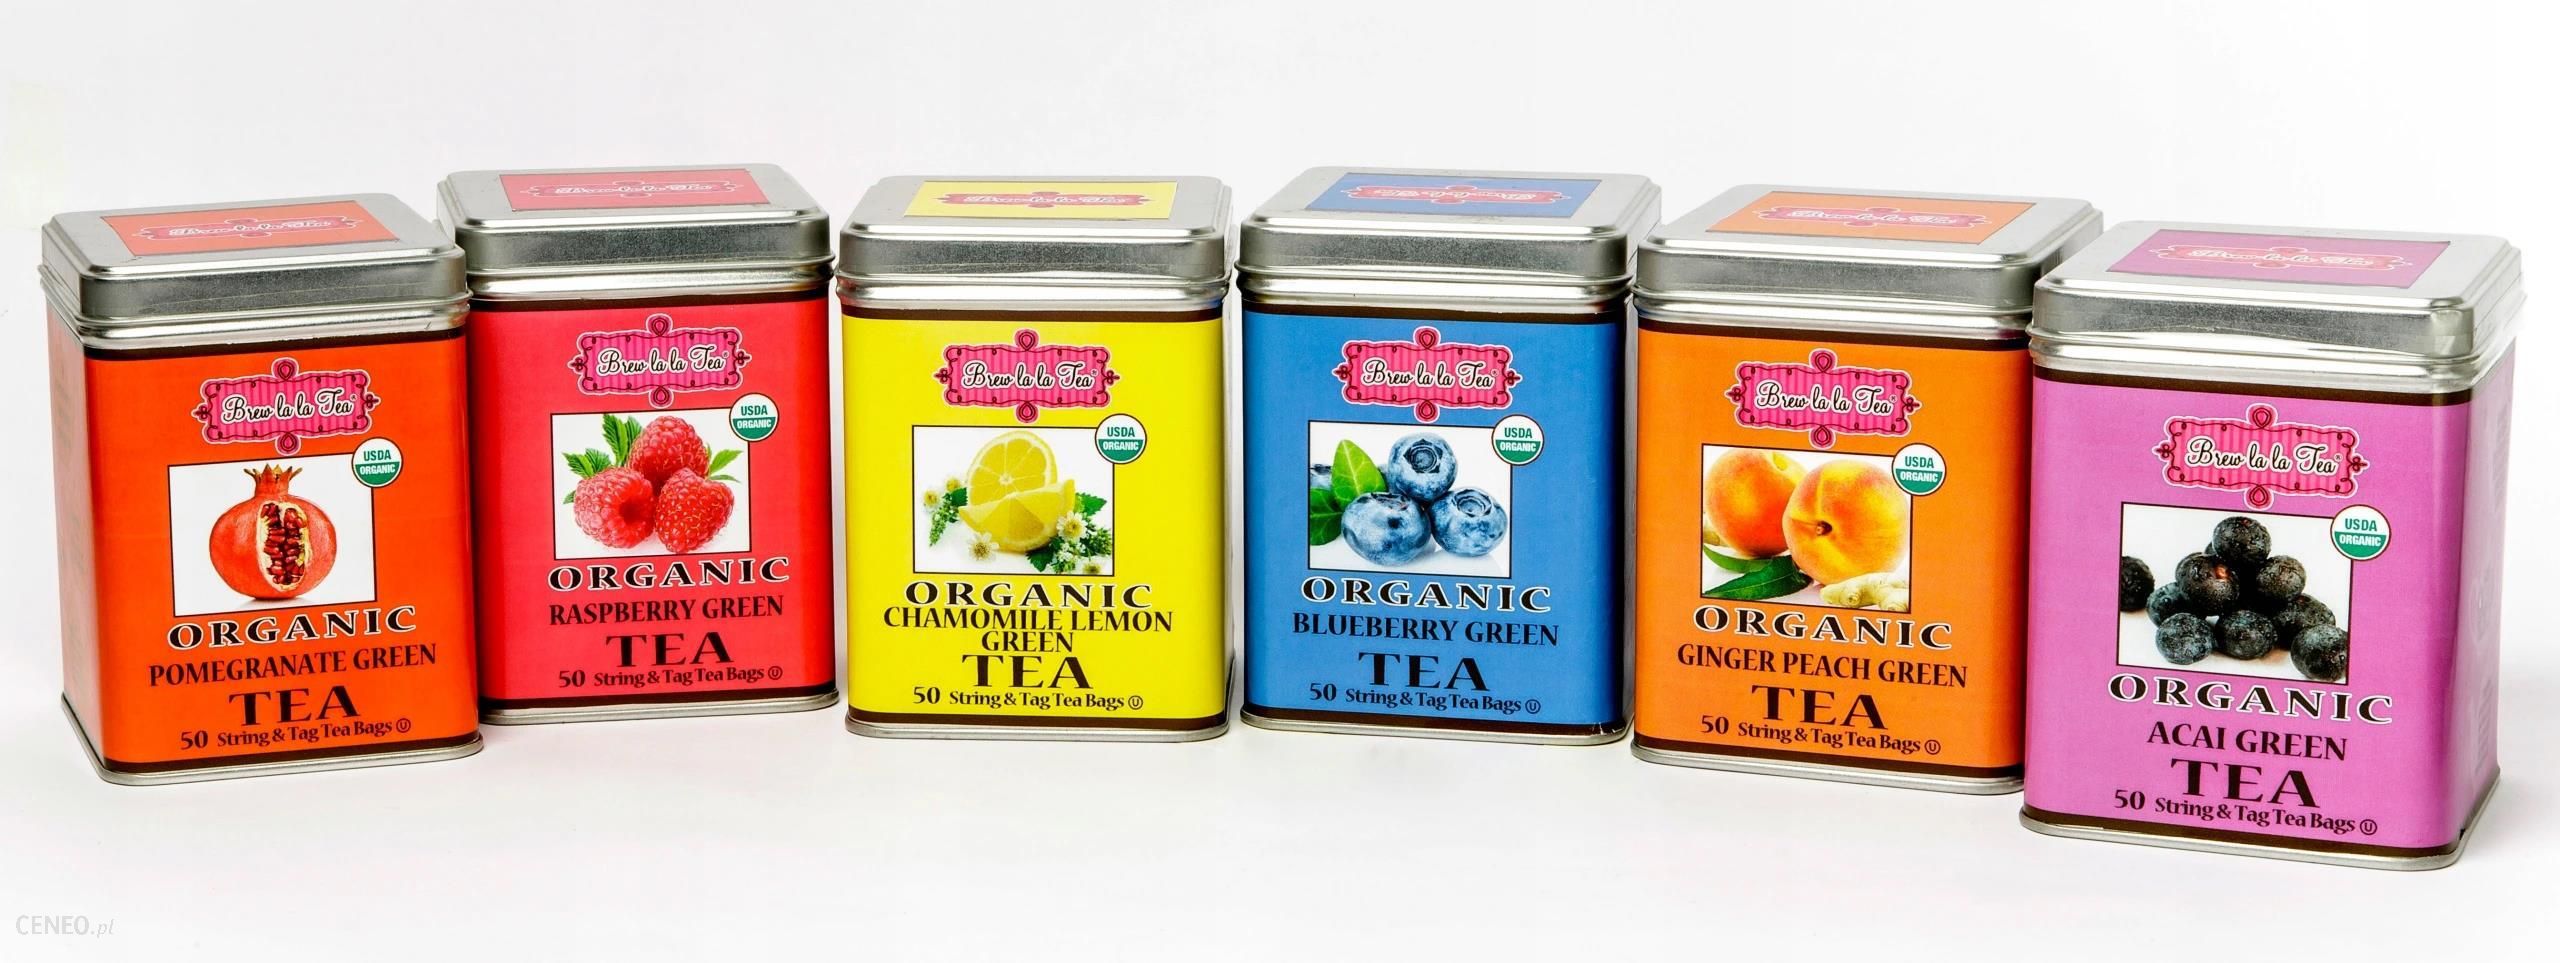 https://image.ceneostatic.pl/data/products/112138755/4c156c96-a633-4dd7-b70a-a4d209df4702_i-brew-la-la-tea-brew-la-tea-organiczna-zielona-herbata-marakuja-ekologiczna.jpg?=b5168